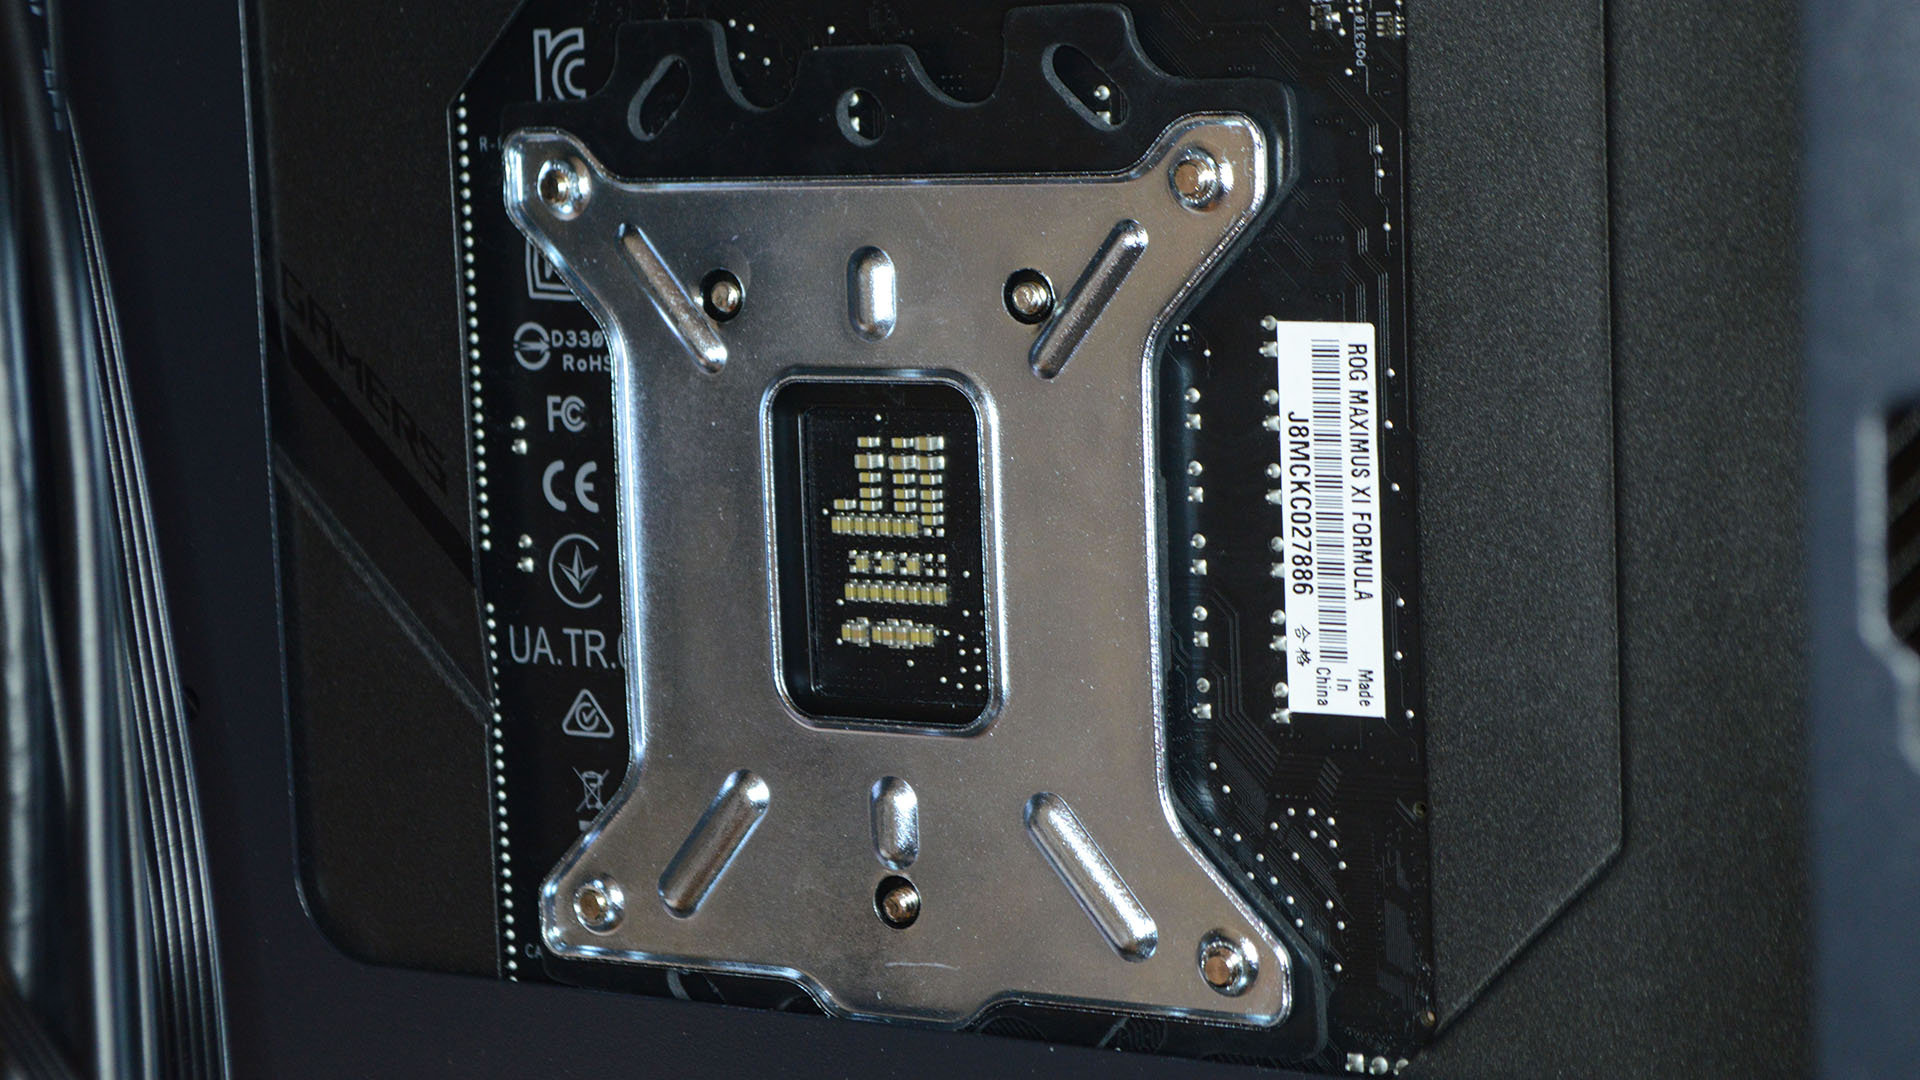 EKWB CPU block mounting from the rear